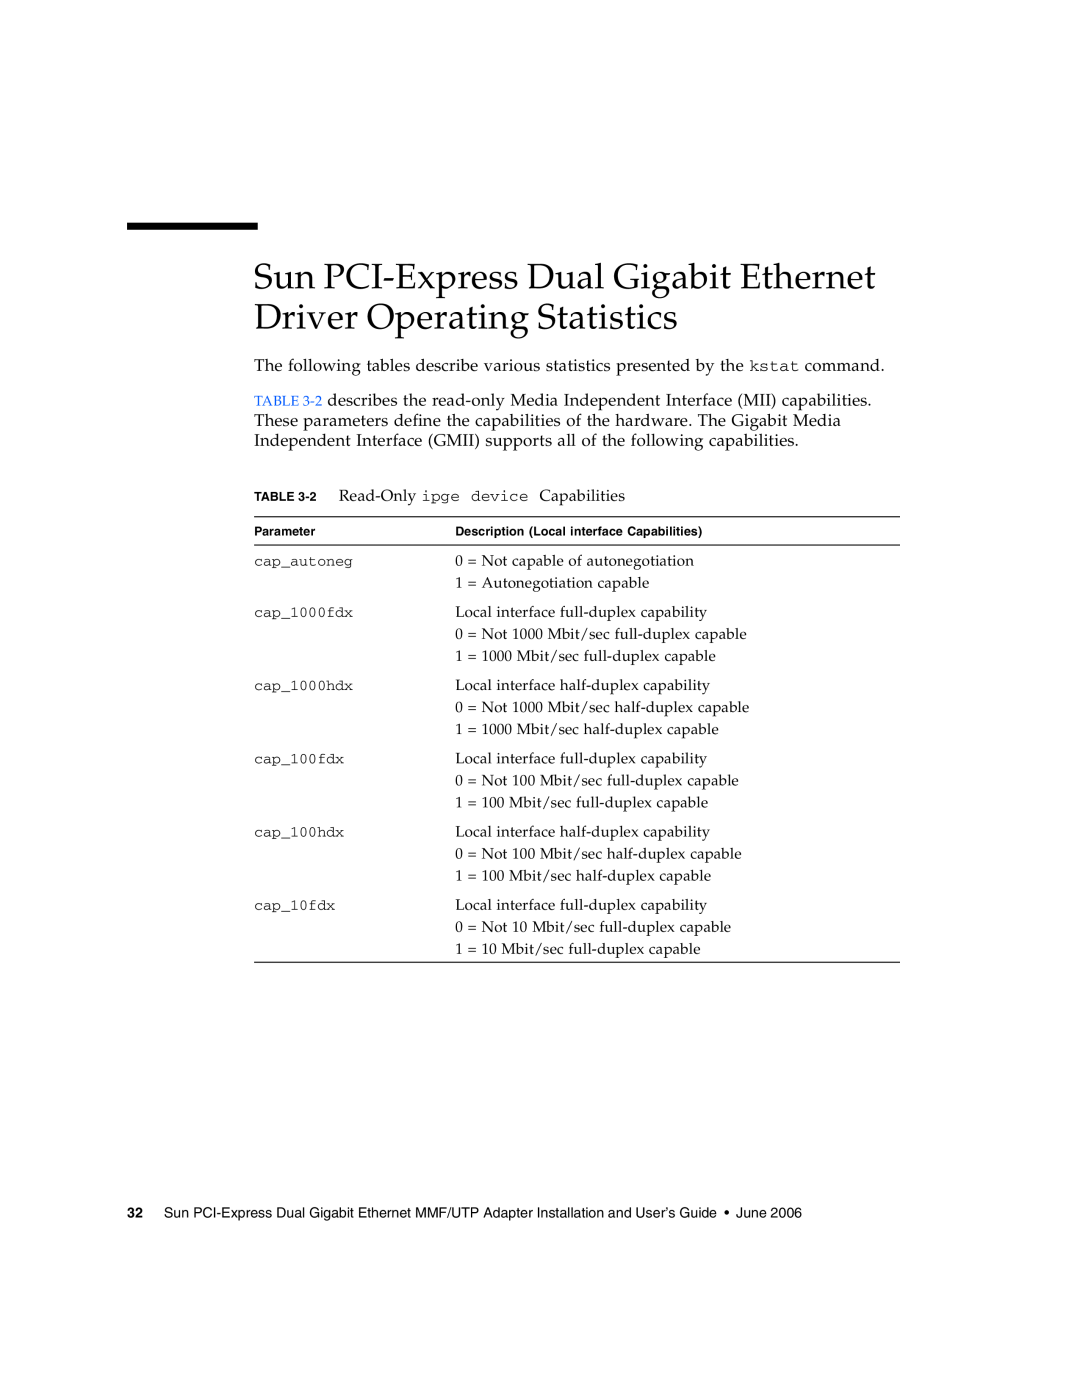 Sun Microsystems Gigabit Ethernet MMF/UTP Adapter manual Sun PCI-Express Dual Gigabit Ethernet Driver Operating Statistics 